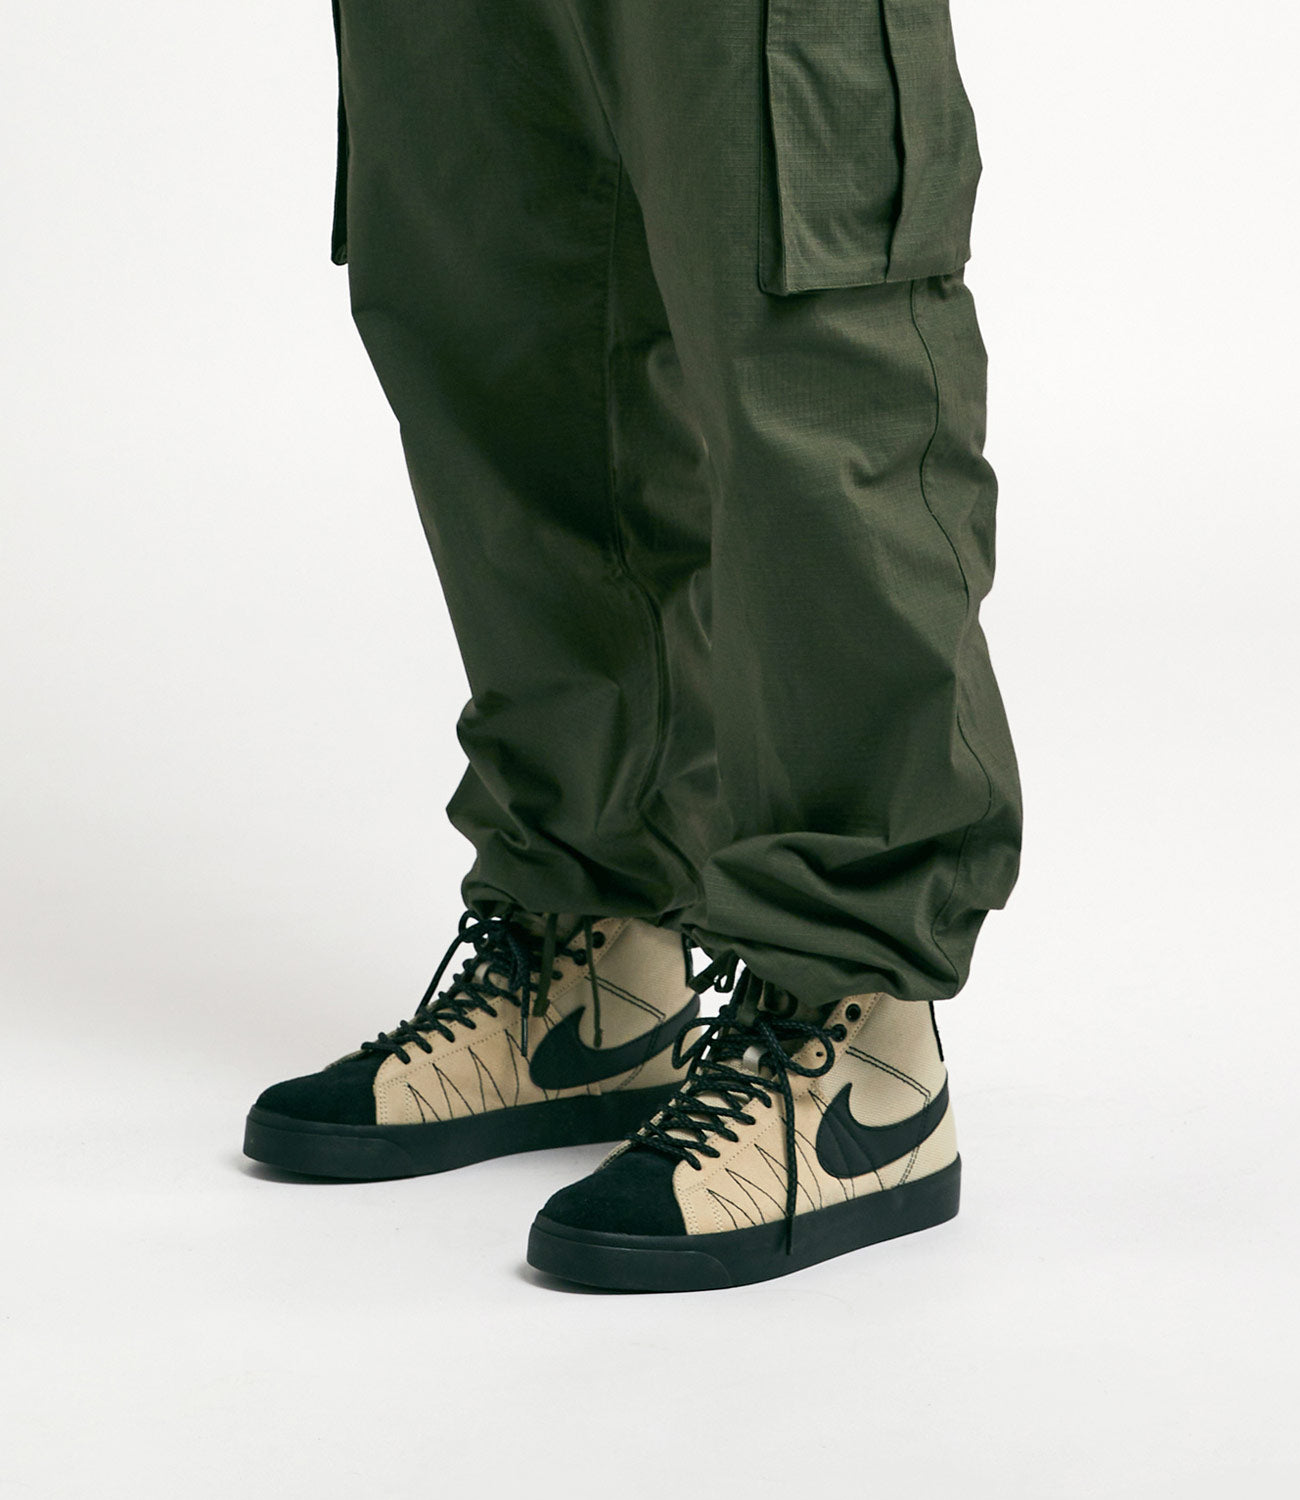 Nike SB Blazer Mid Premium Shoes - Rattan / Black - Rattan - Safety Or ...